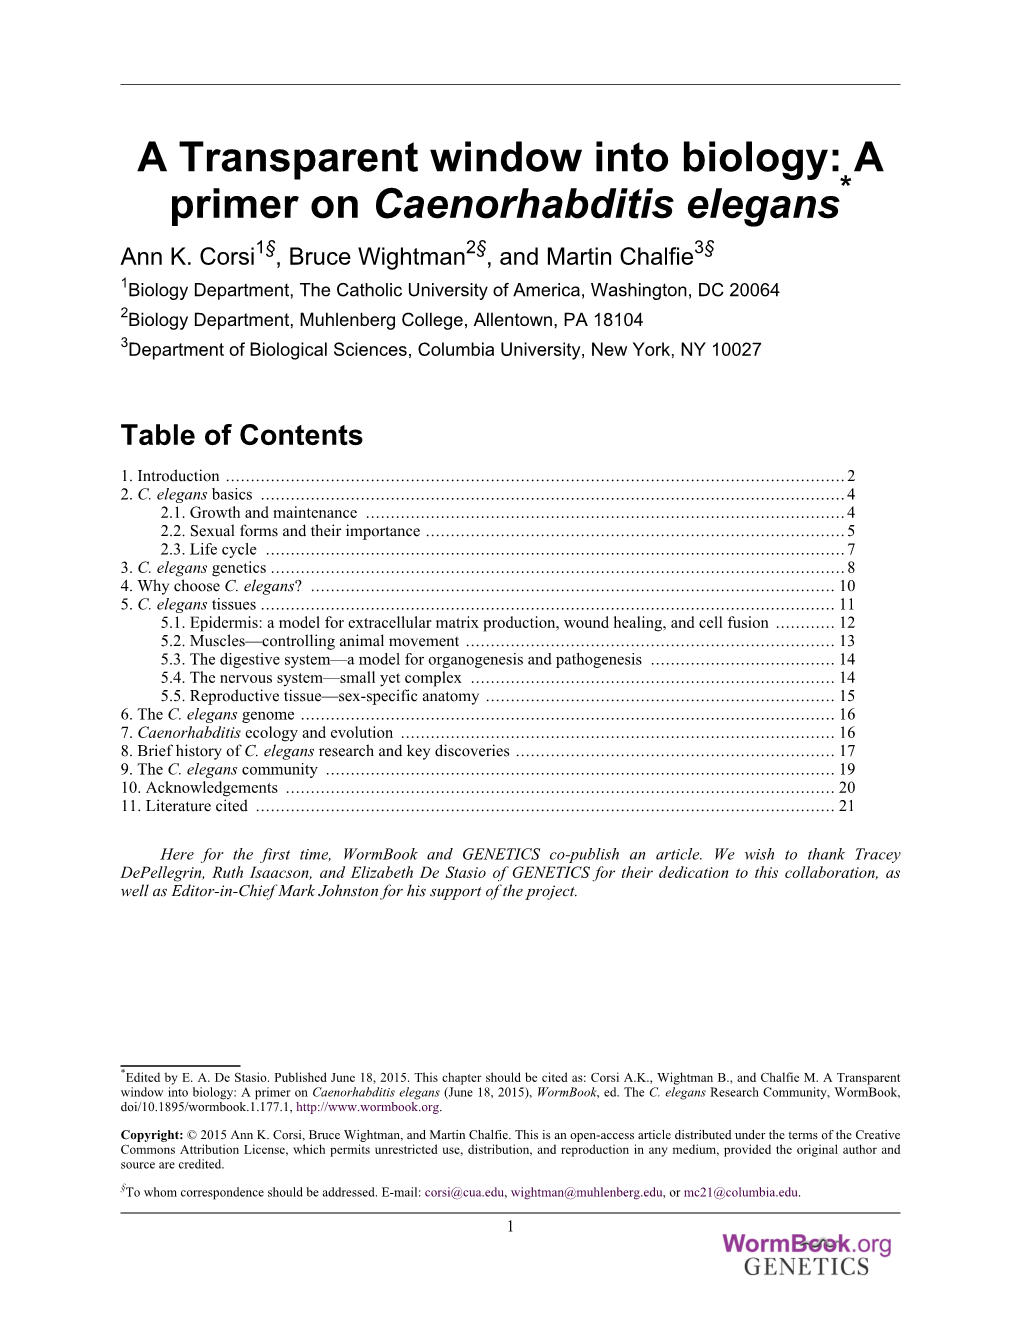 A Transparent Window Into Biology: a Primer on Caenorhabditis Elegans* Ann K